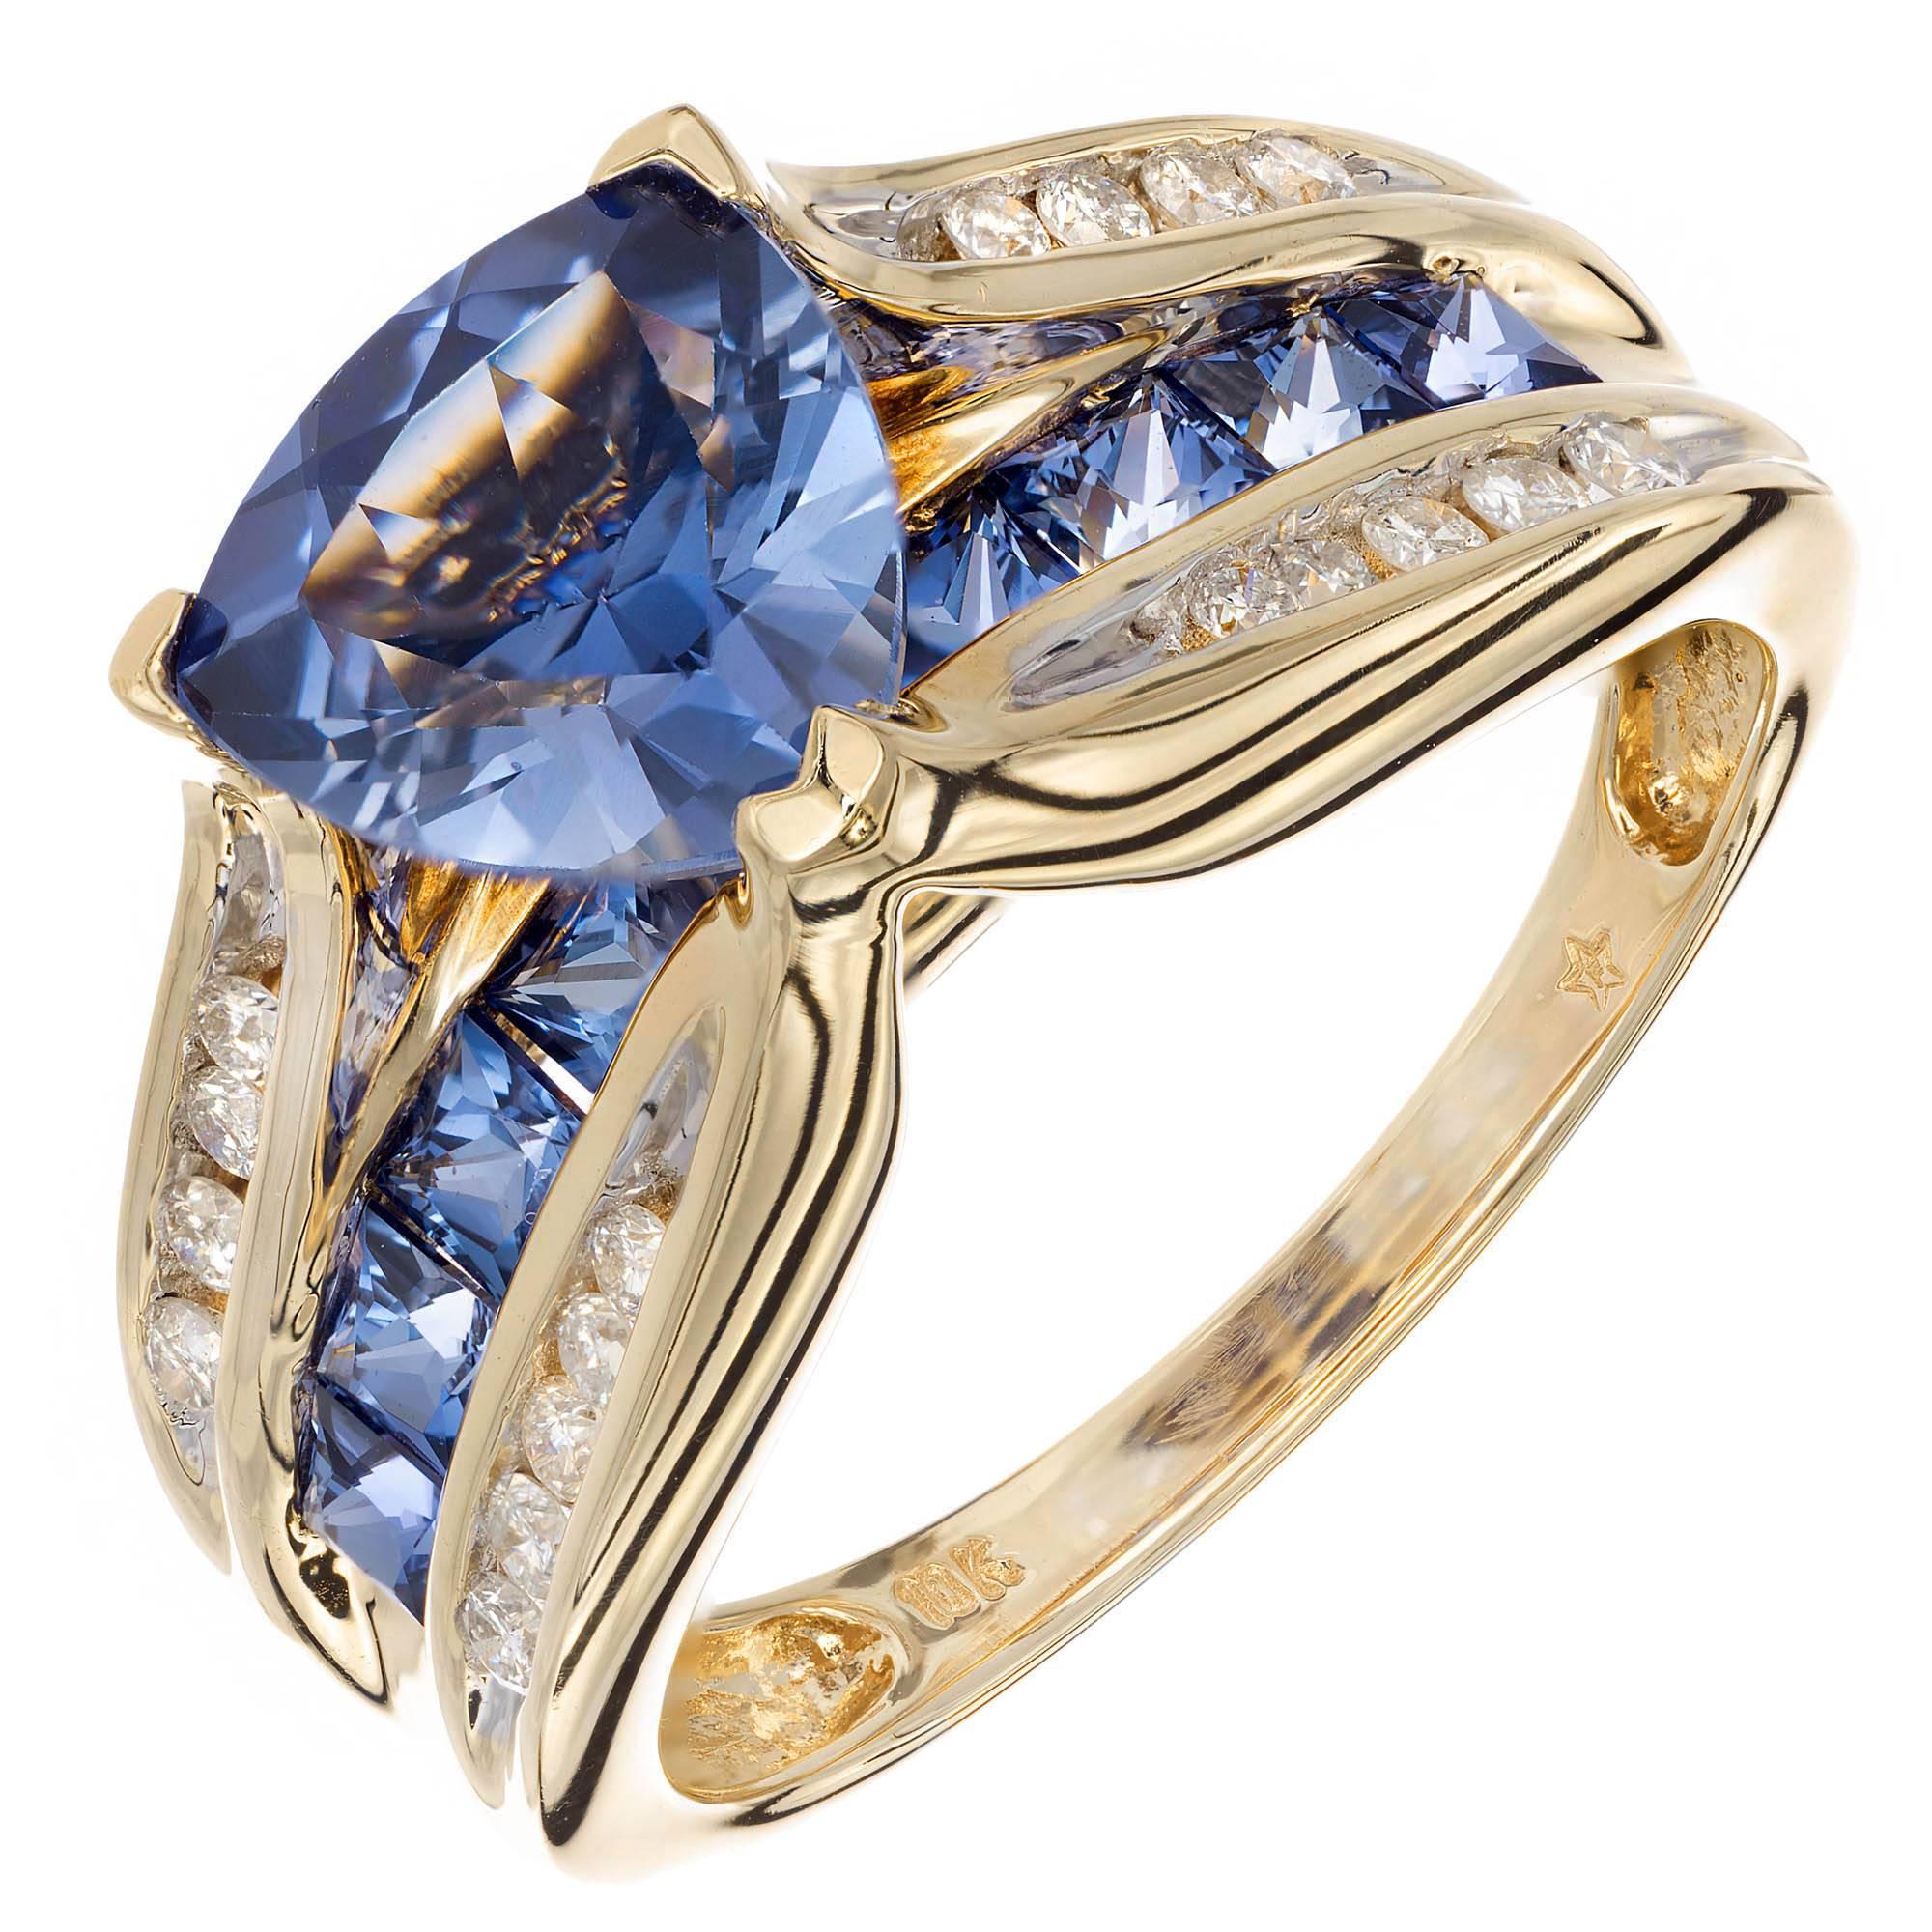 1.54 Carat Tanzanite Diamond Yellow Gold Diamond Engagement Ring